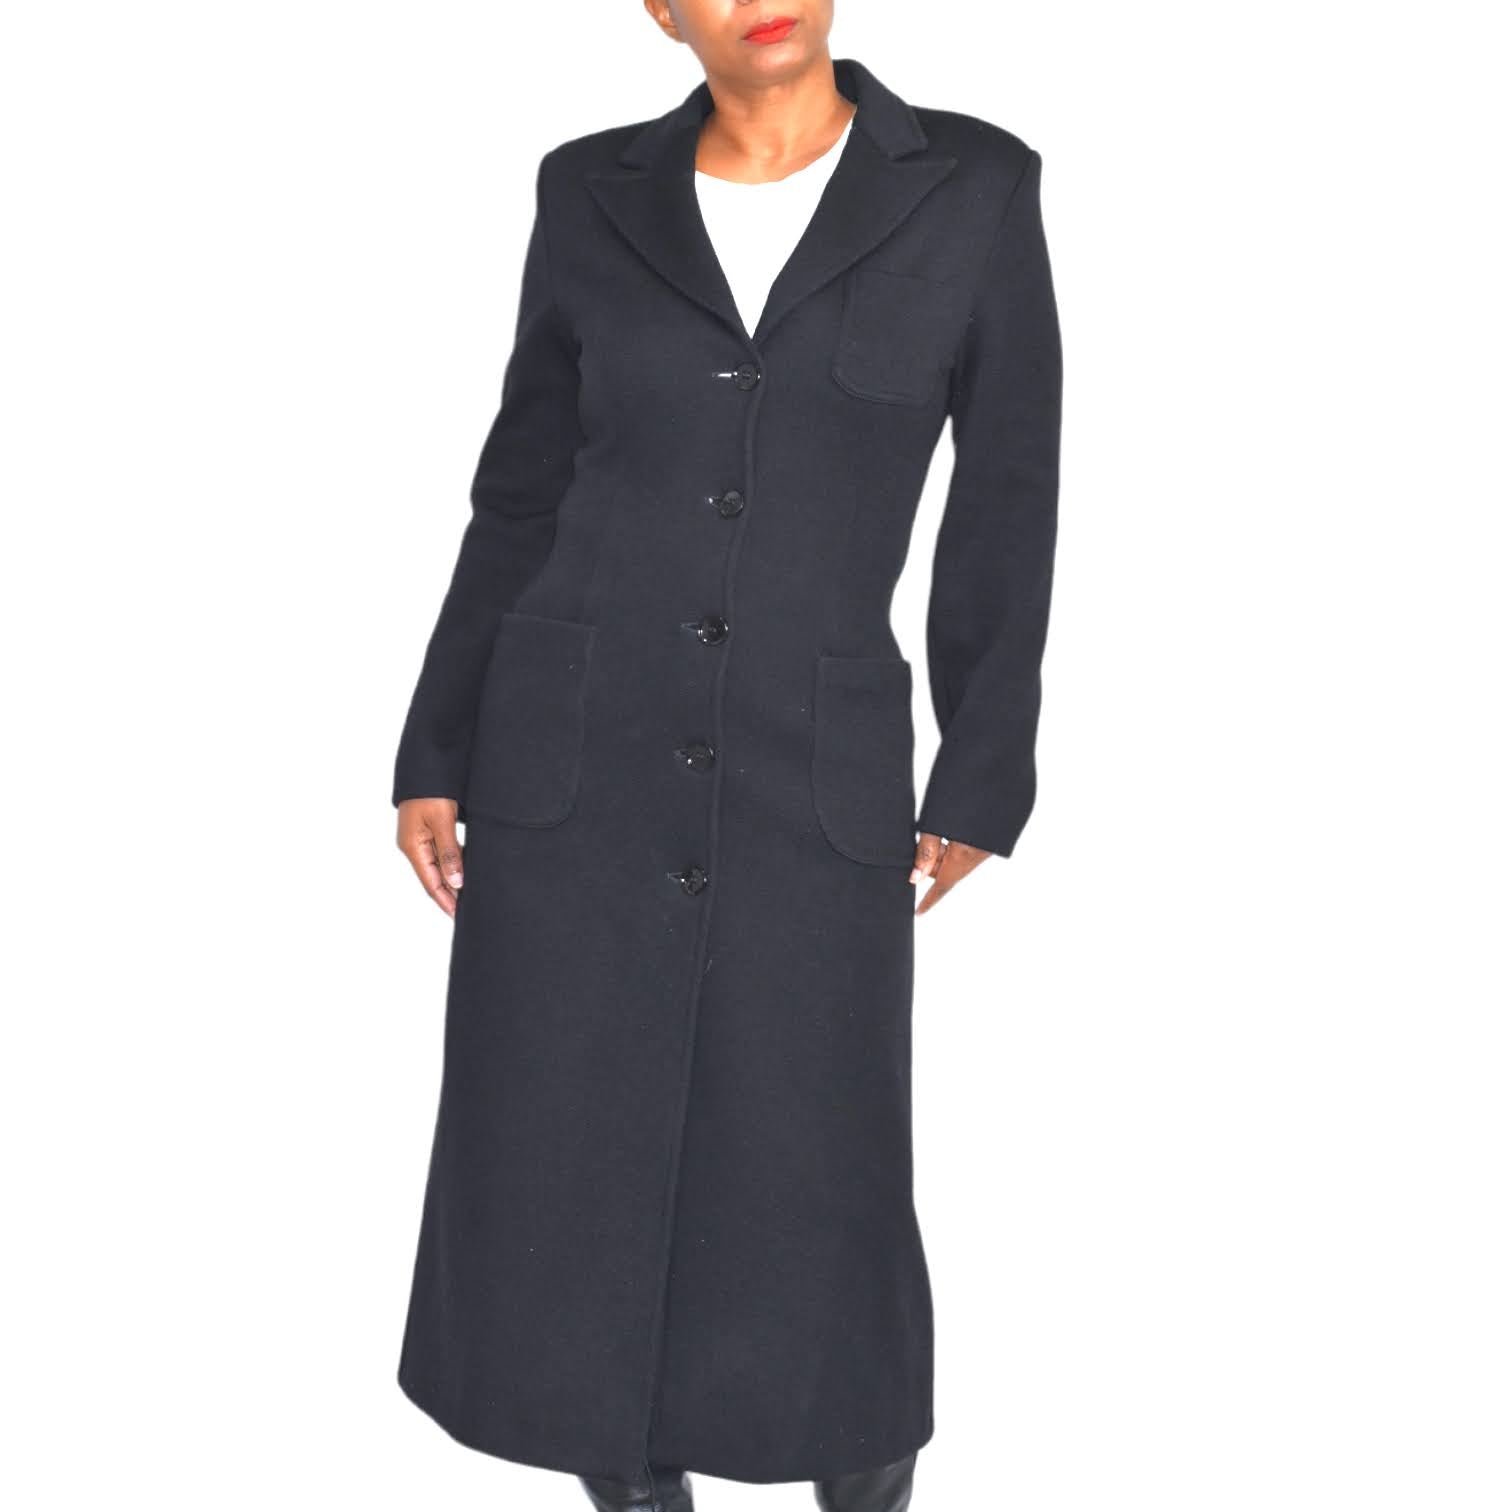 Armani Black Long Wool Coat Size Small